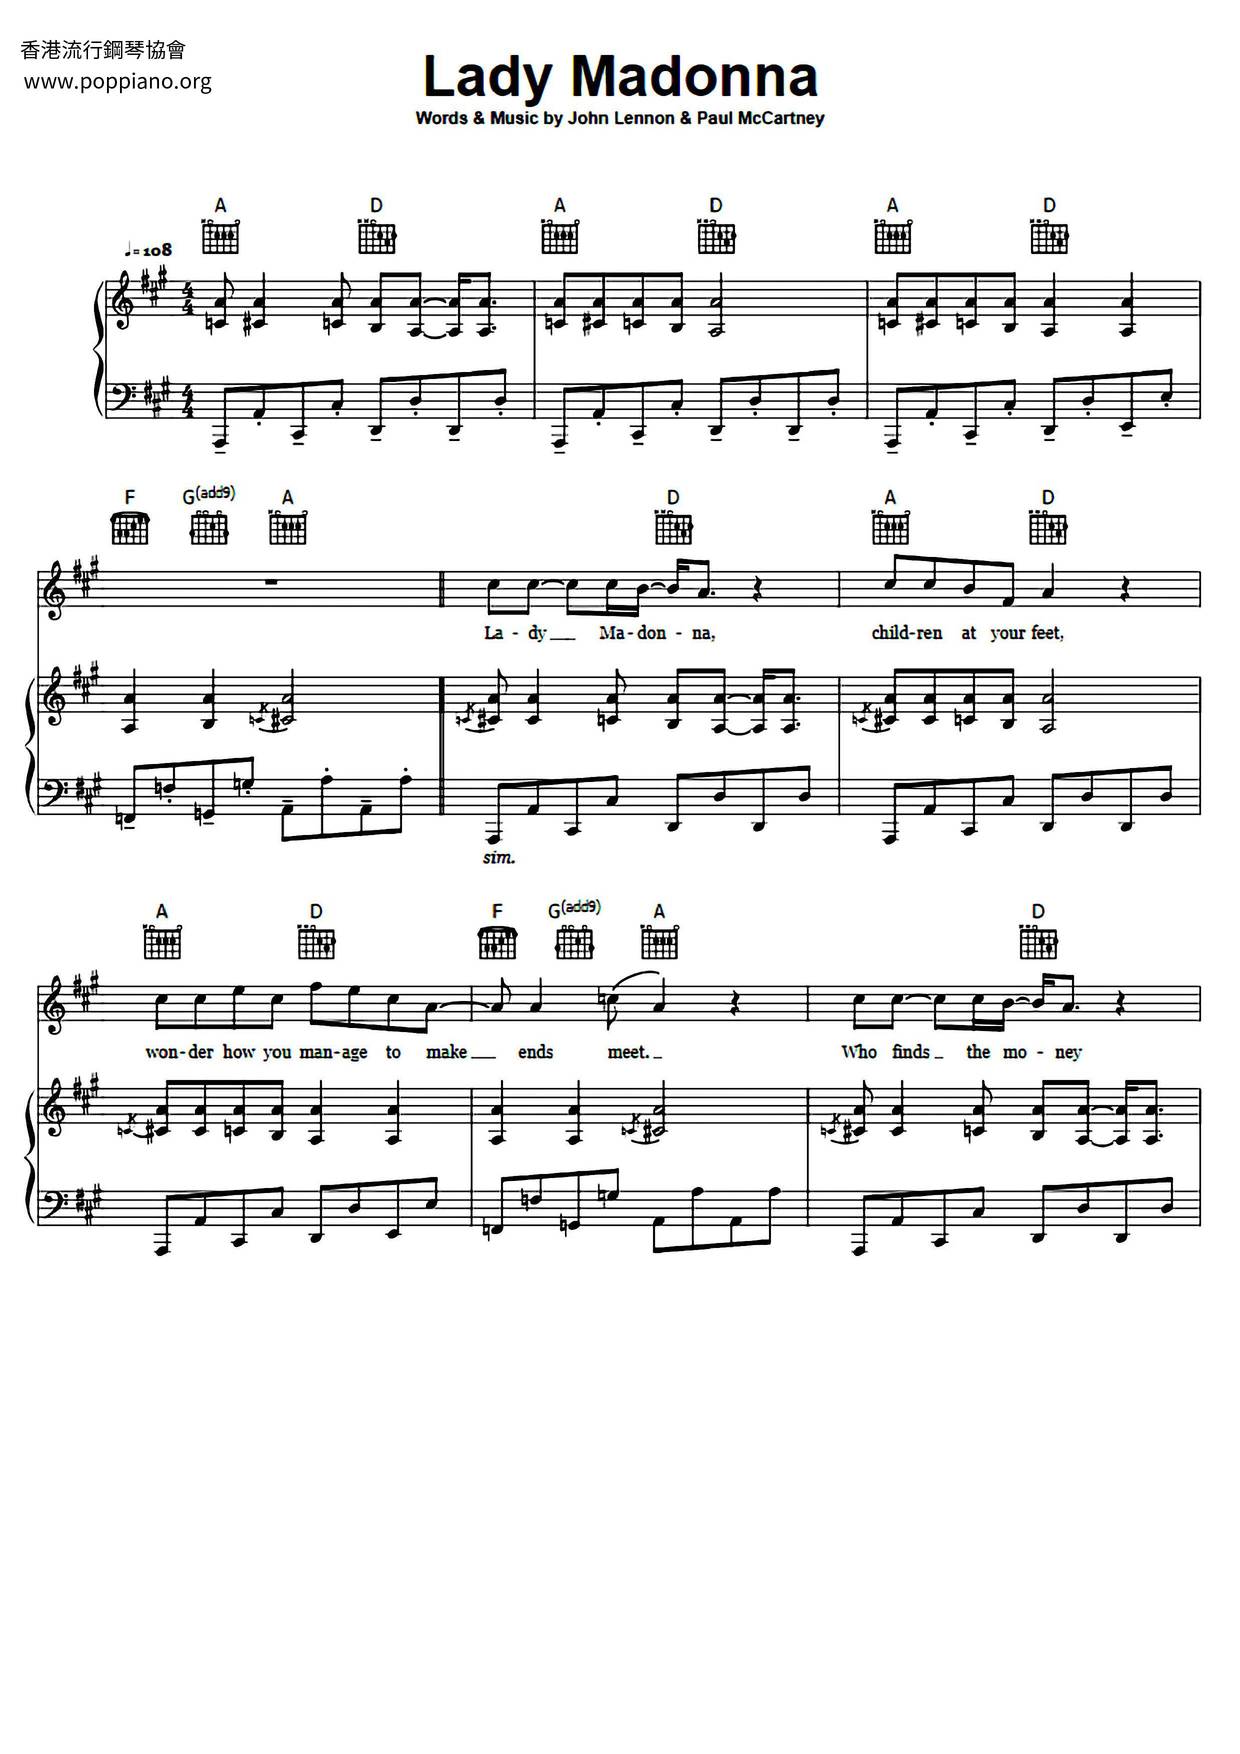 Lady Madonna Score